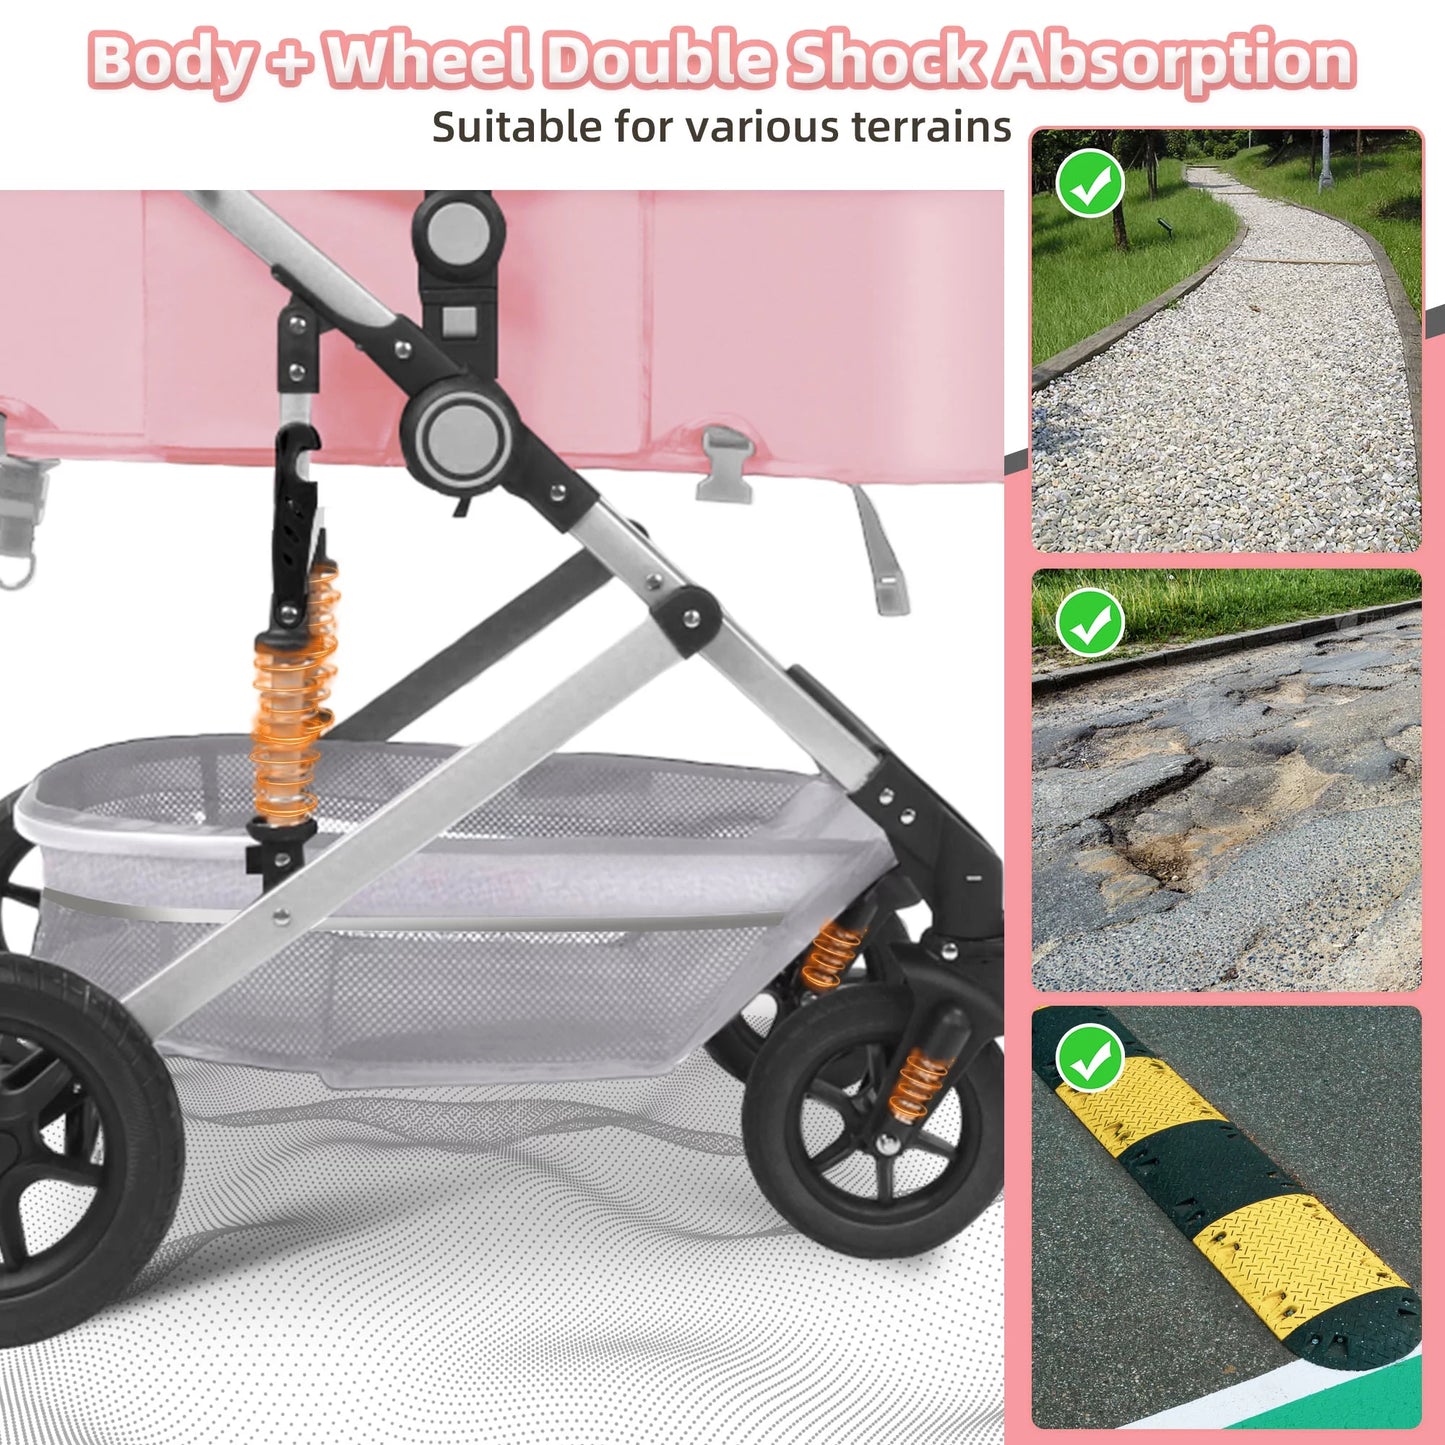 Baby Stroller, Foldable Baby Stroller Reversible Bassinet, Travel Stroller for Newborn Baby, Pink